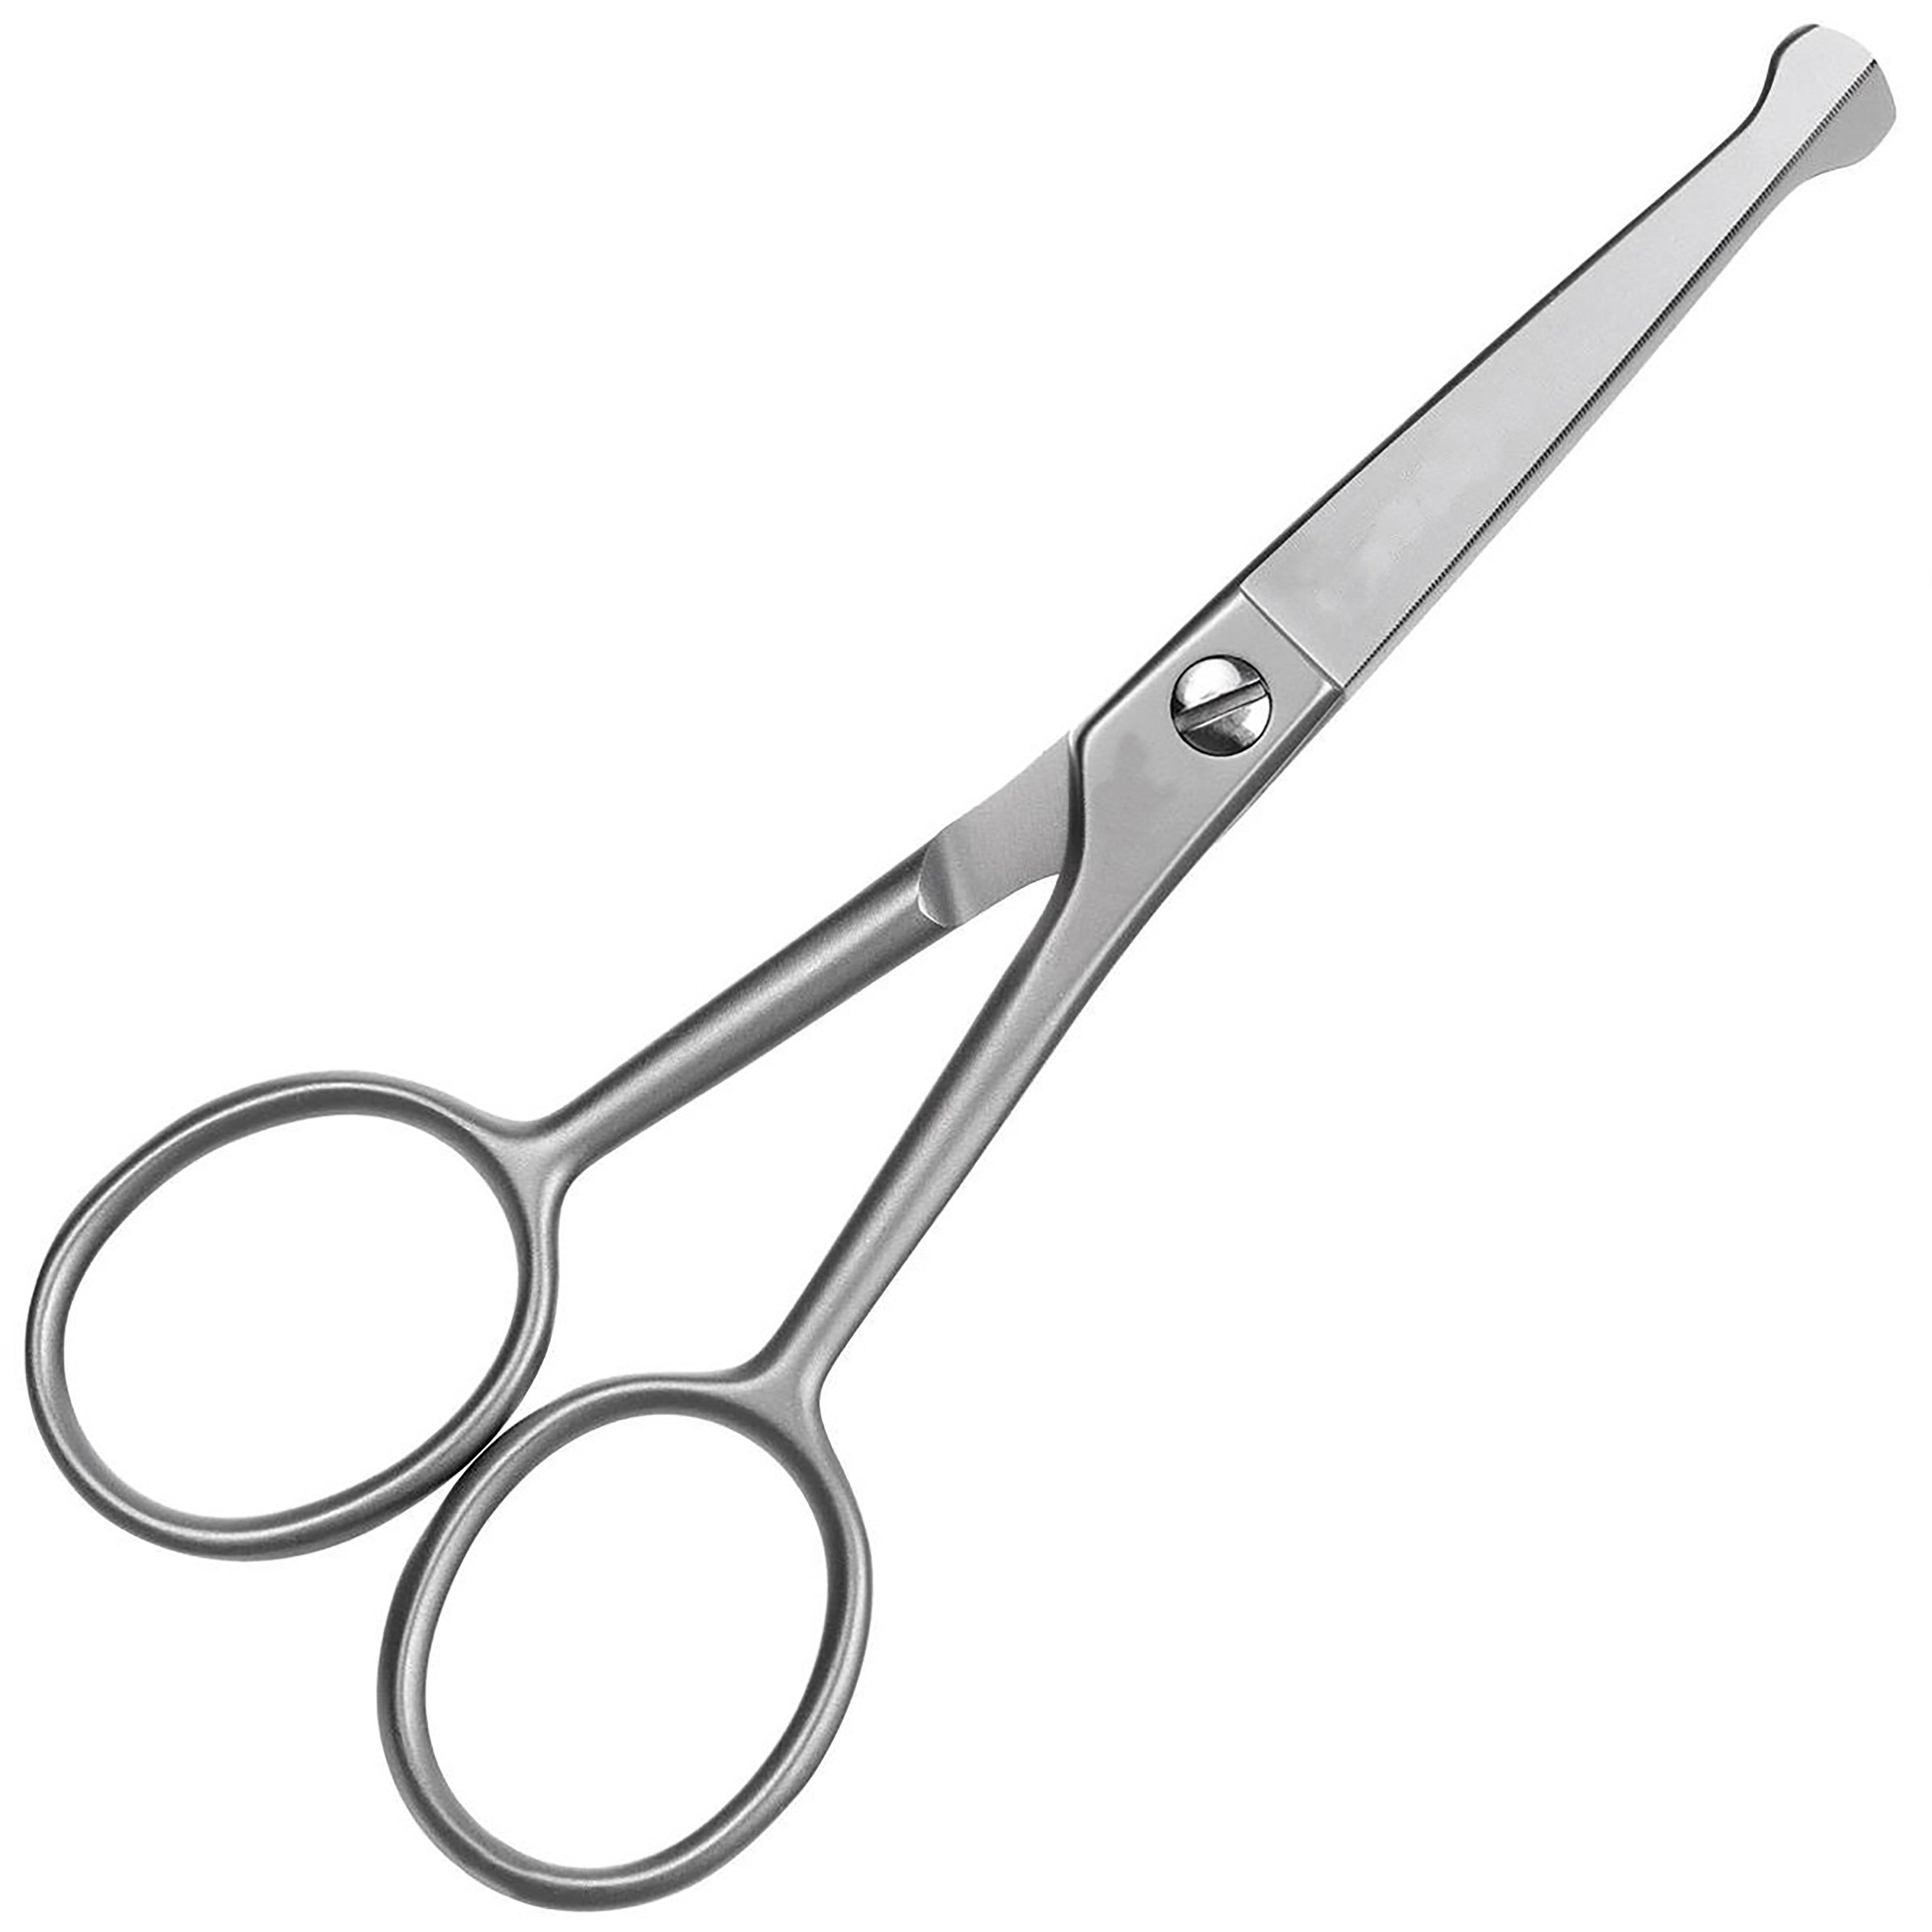 Smart Grooming Scissors Round End